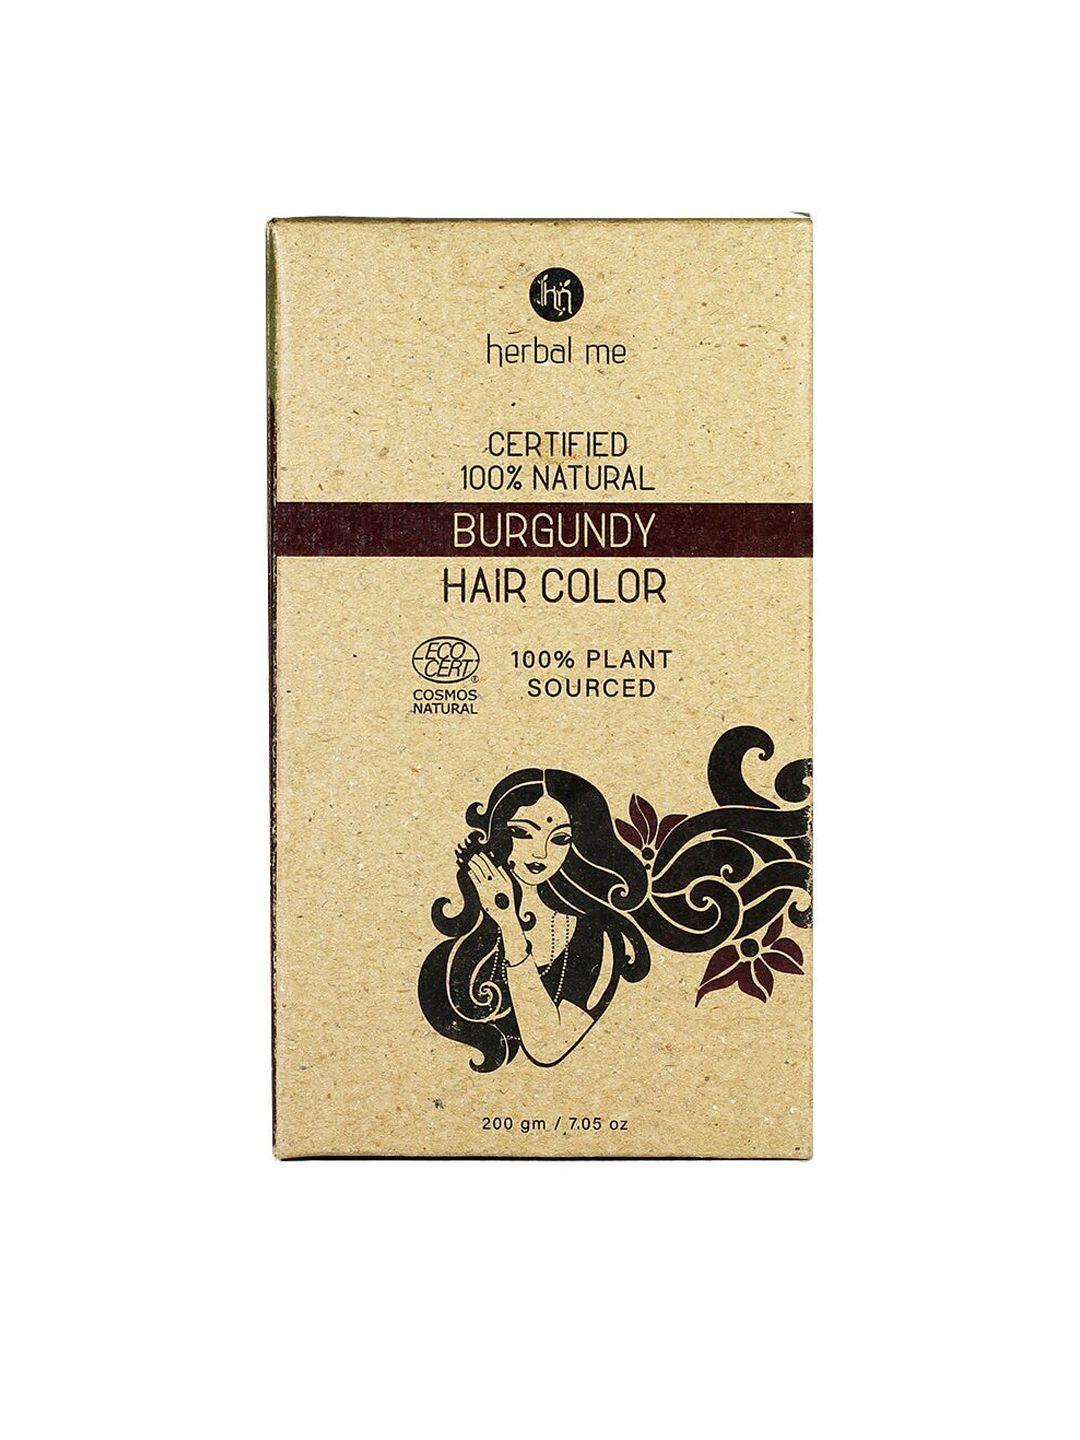 herbal me certified 100% natural hair colour 200 g - burgundy